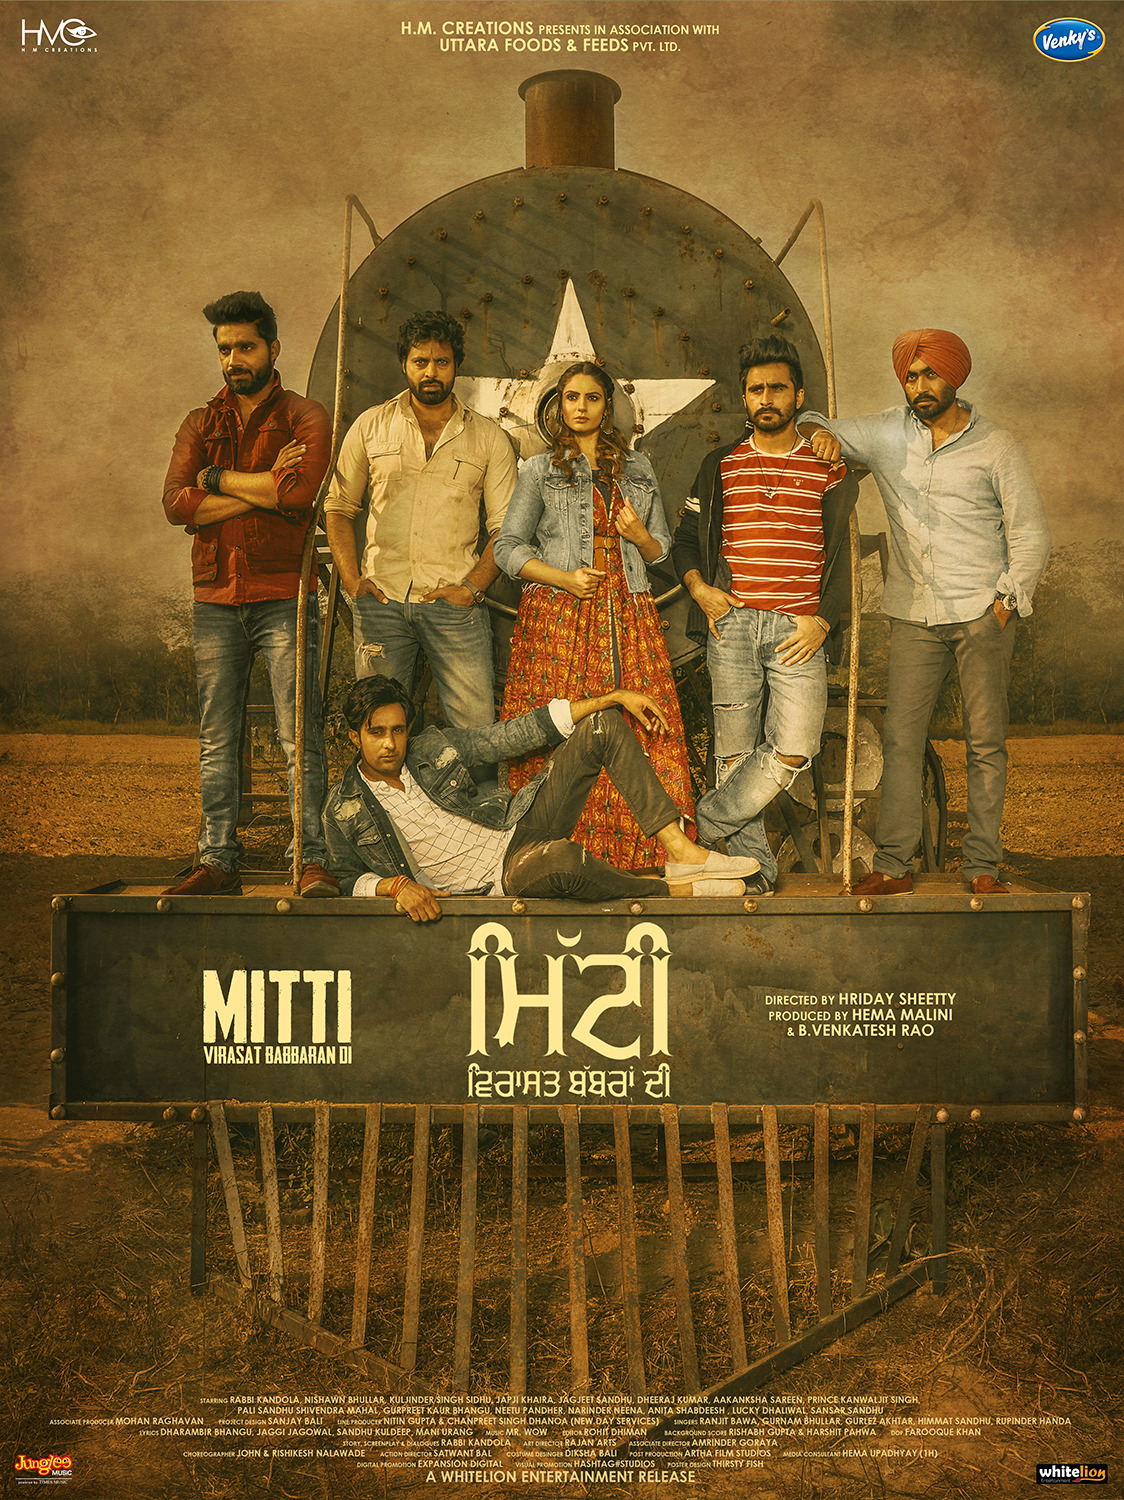 Extra Large Movie Poster Image for Mitti: Virasat Babbaran Di (#2 of 2)